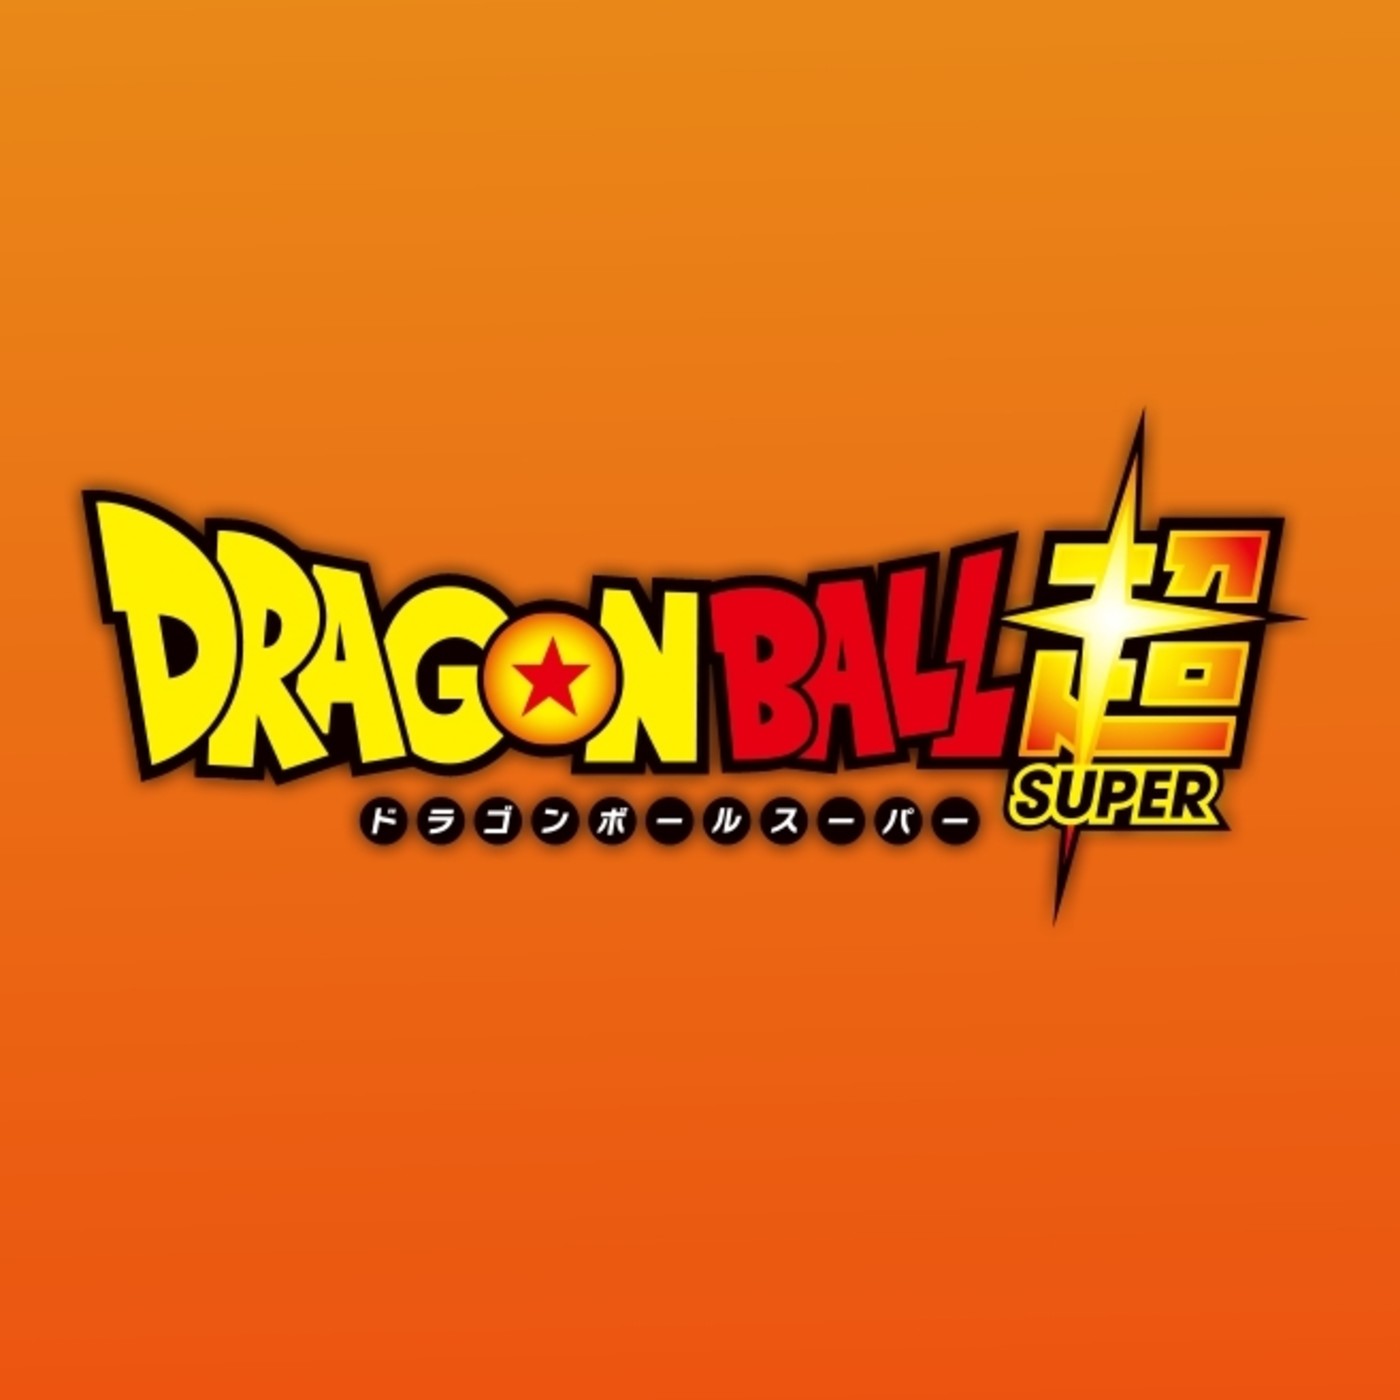 Gambatte Podcast | 'Dragon Ball Super': Ep. 9, 10 y 11 en castellano